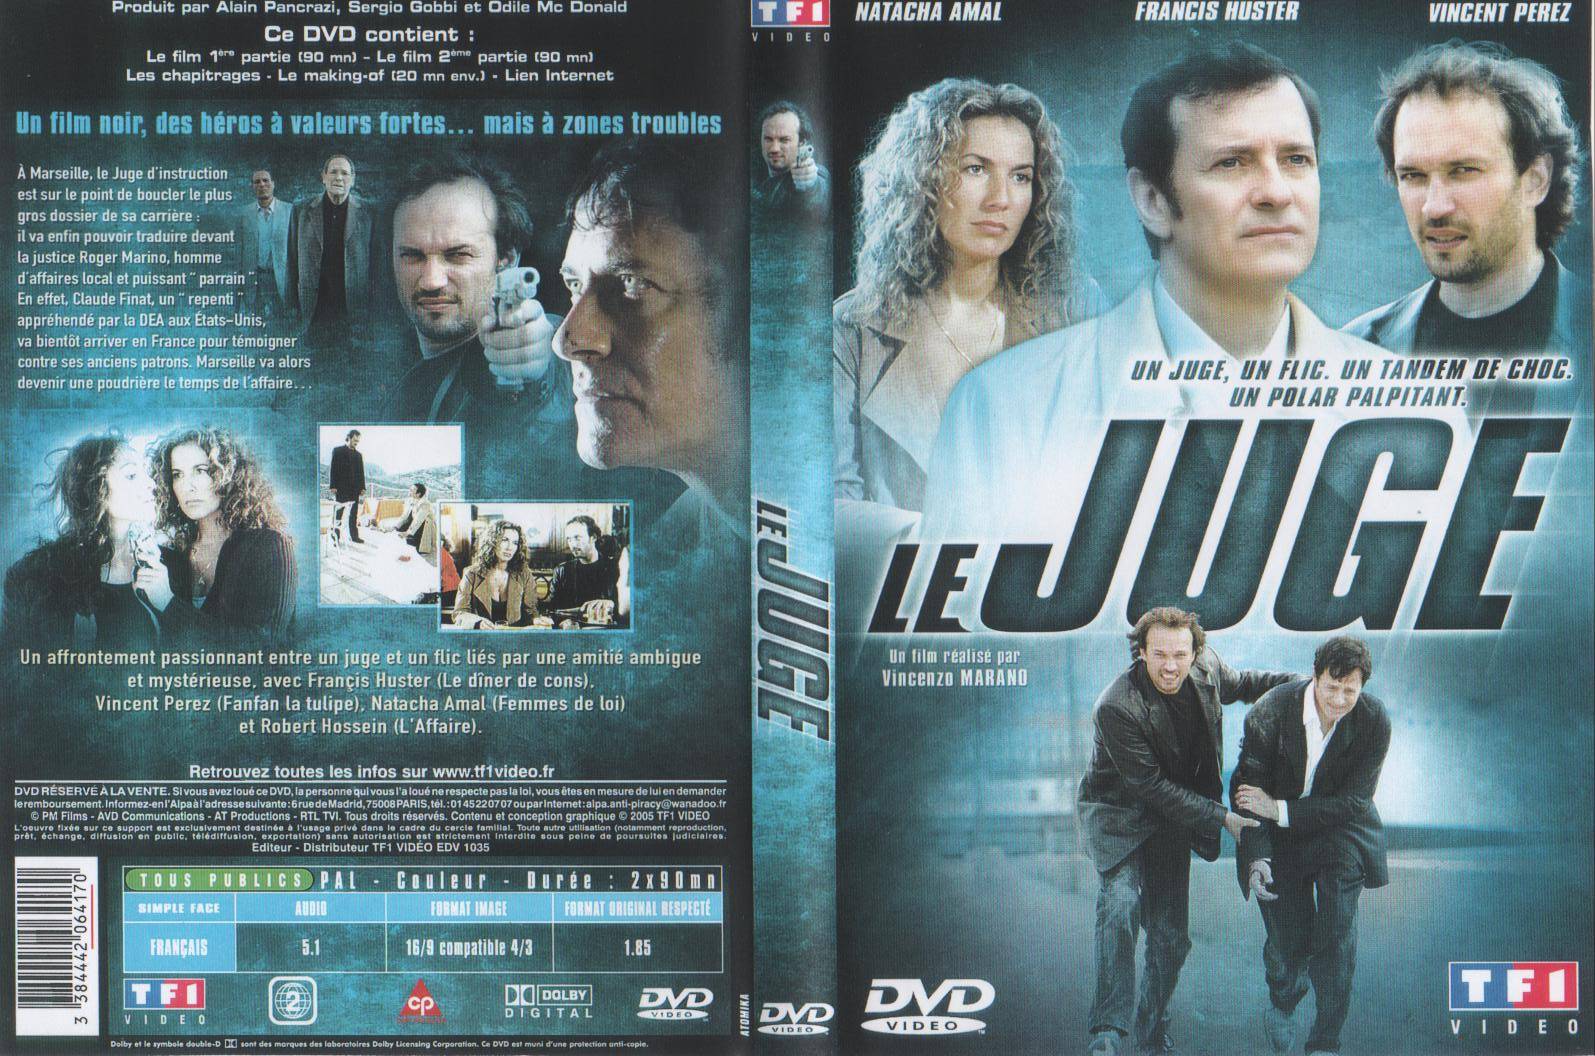 Jaquette DVD Le juge (Francis Huster)